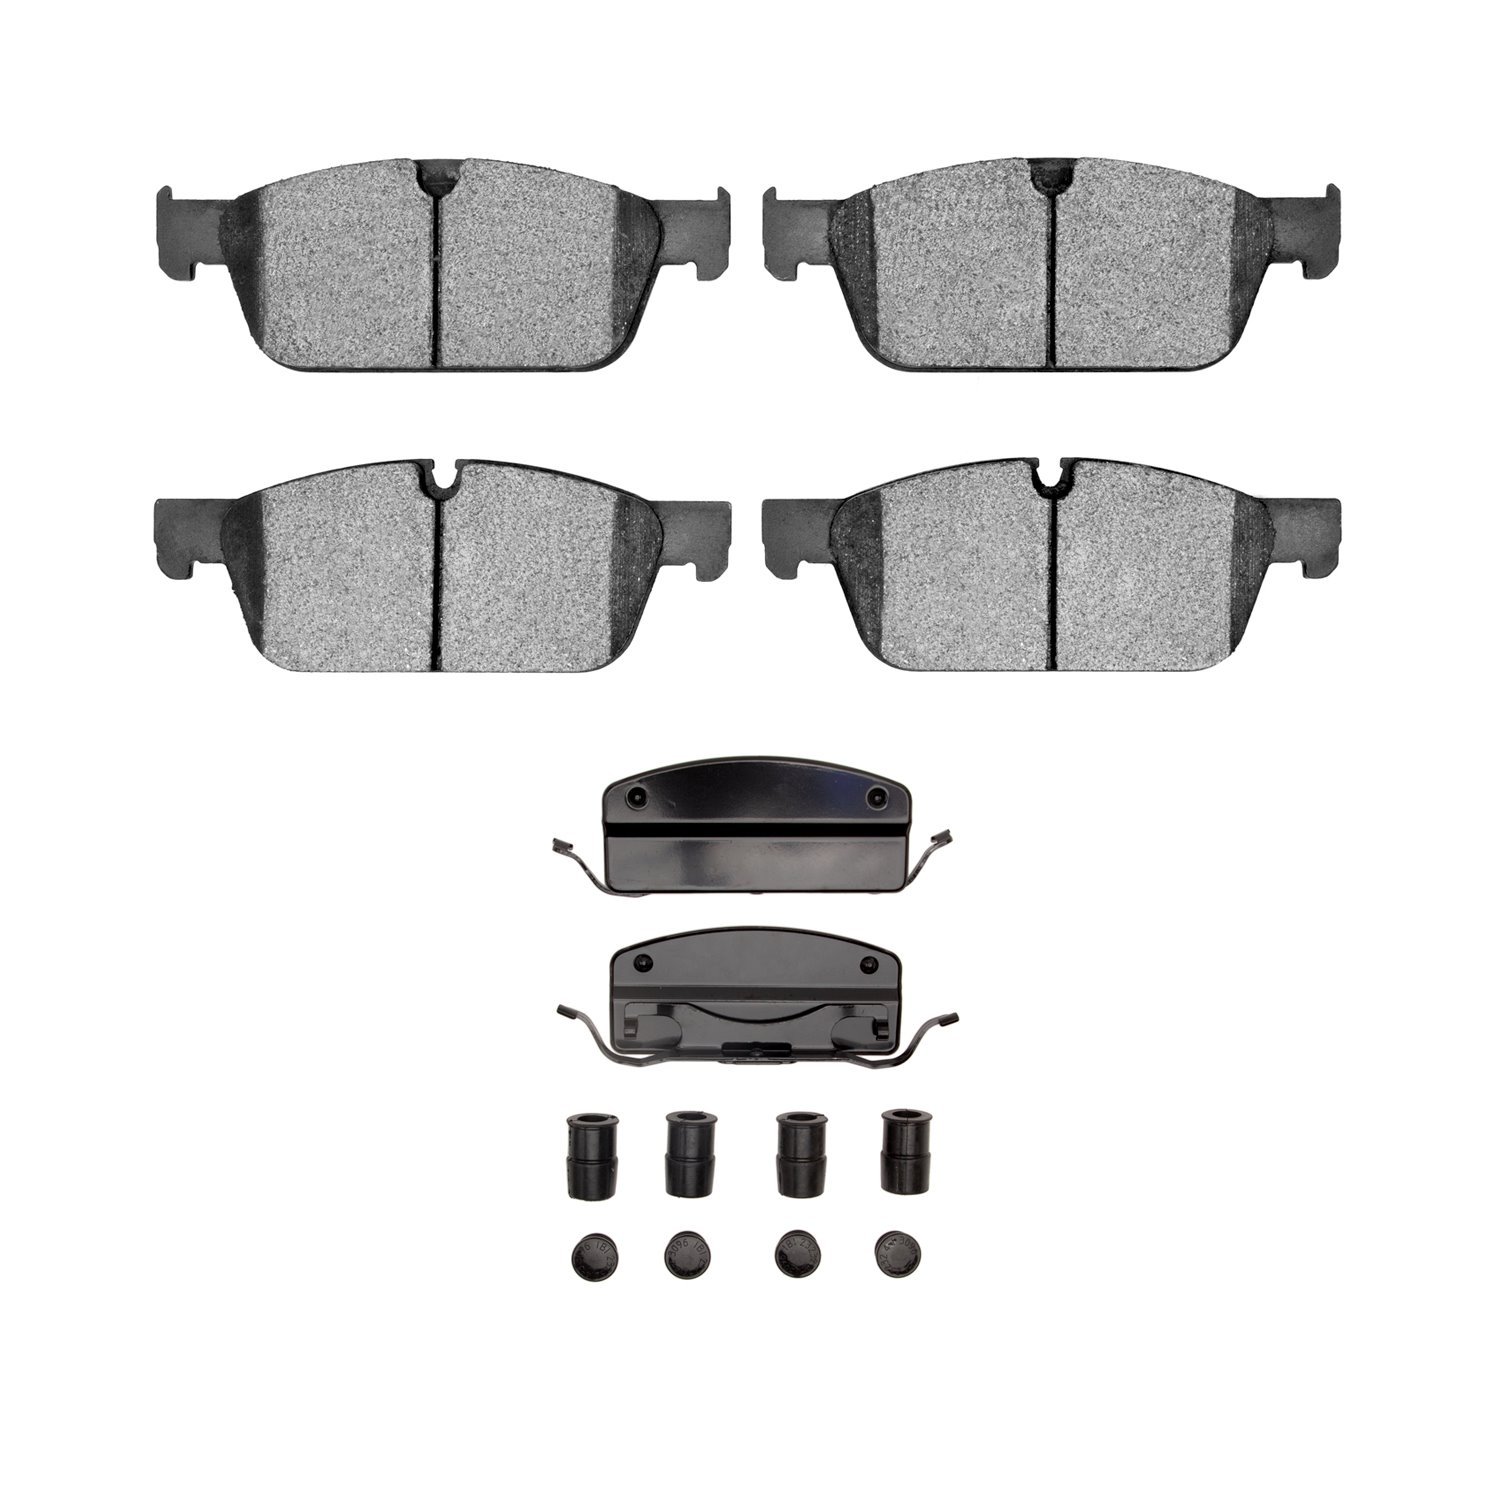 1310-1636-11 3000-Series Ceramic Brake Pads & Hardware Kit, 2013-2019 Mercedes-Benz, Position: Front